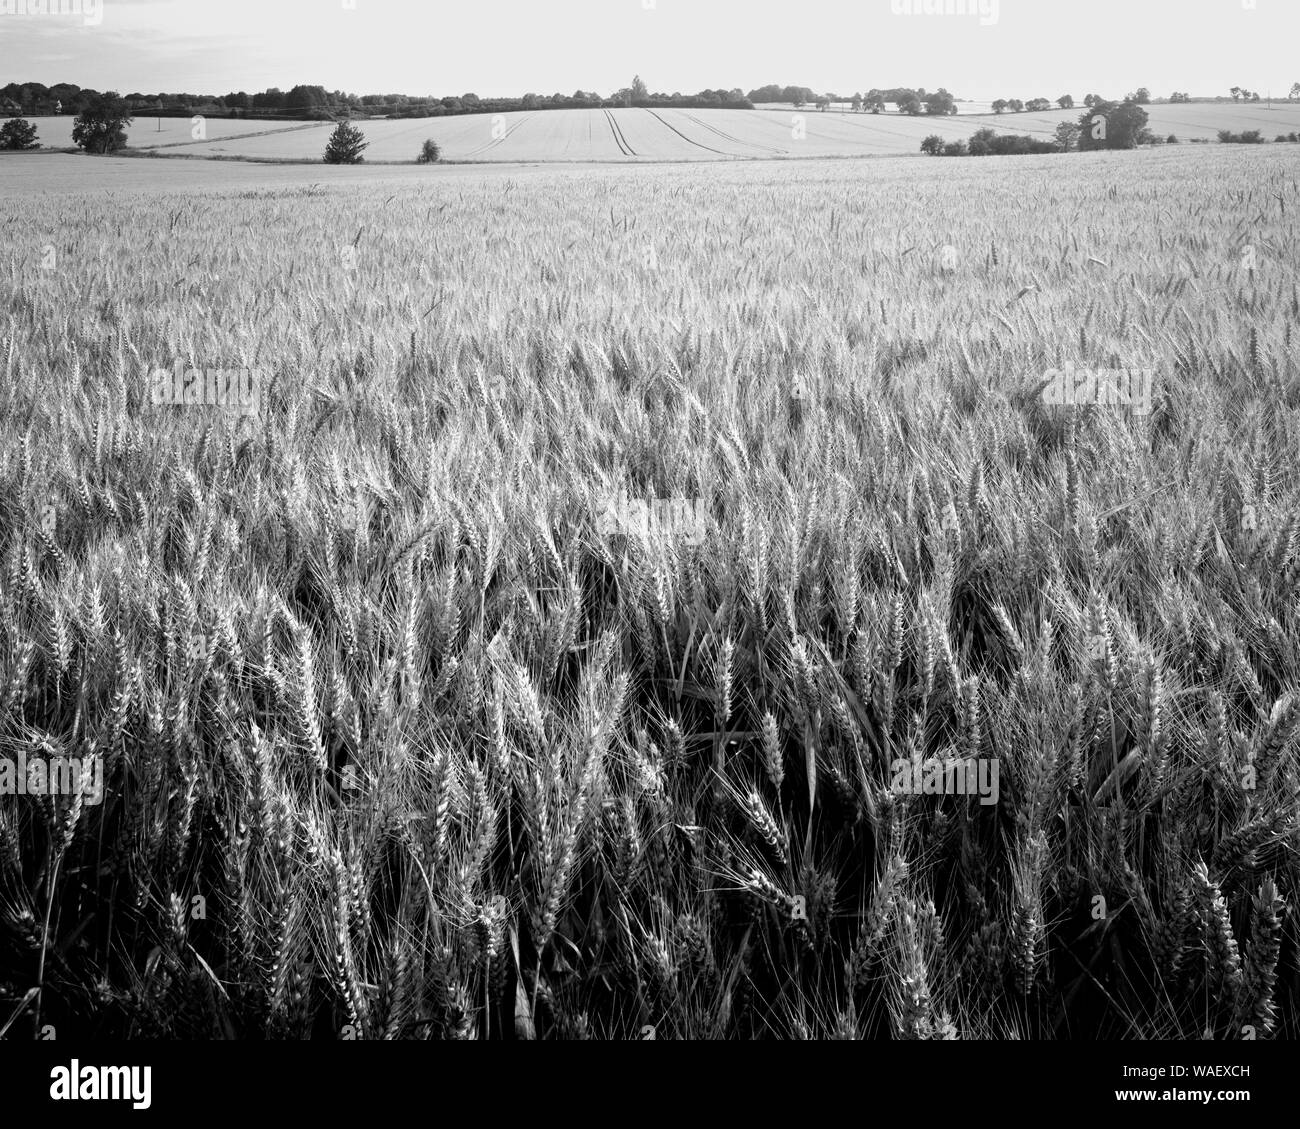 Field of ripening wheat near Bourn, Cambridgeshire, England Stock Photo